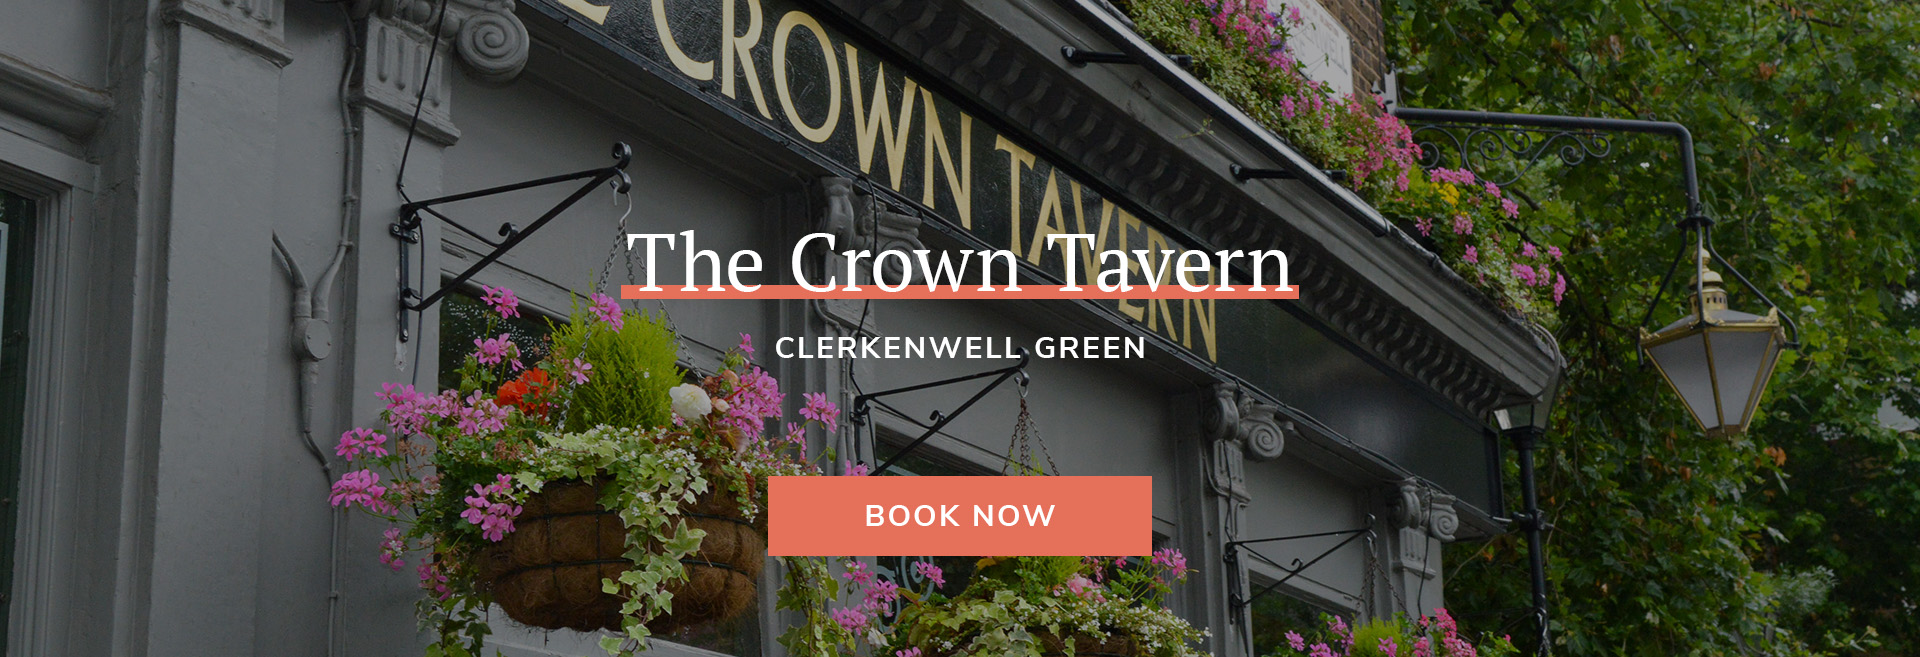 The Crown Tavern Banner 1